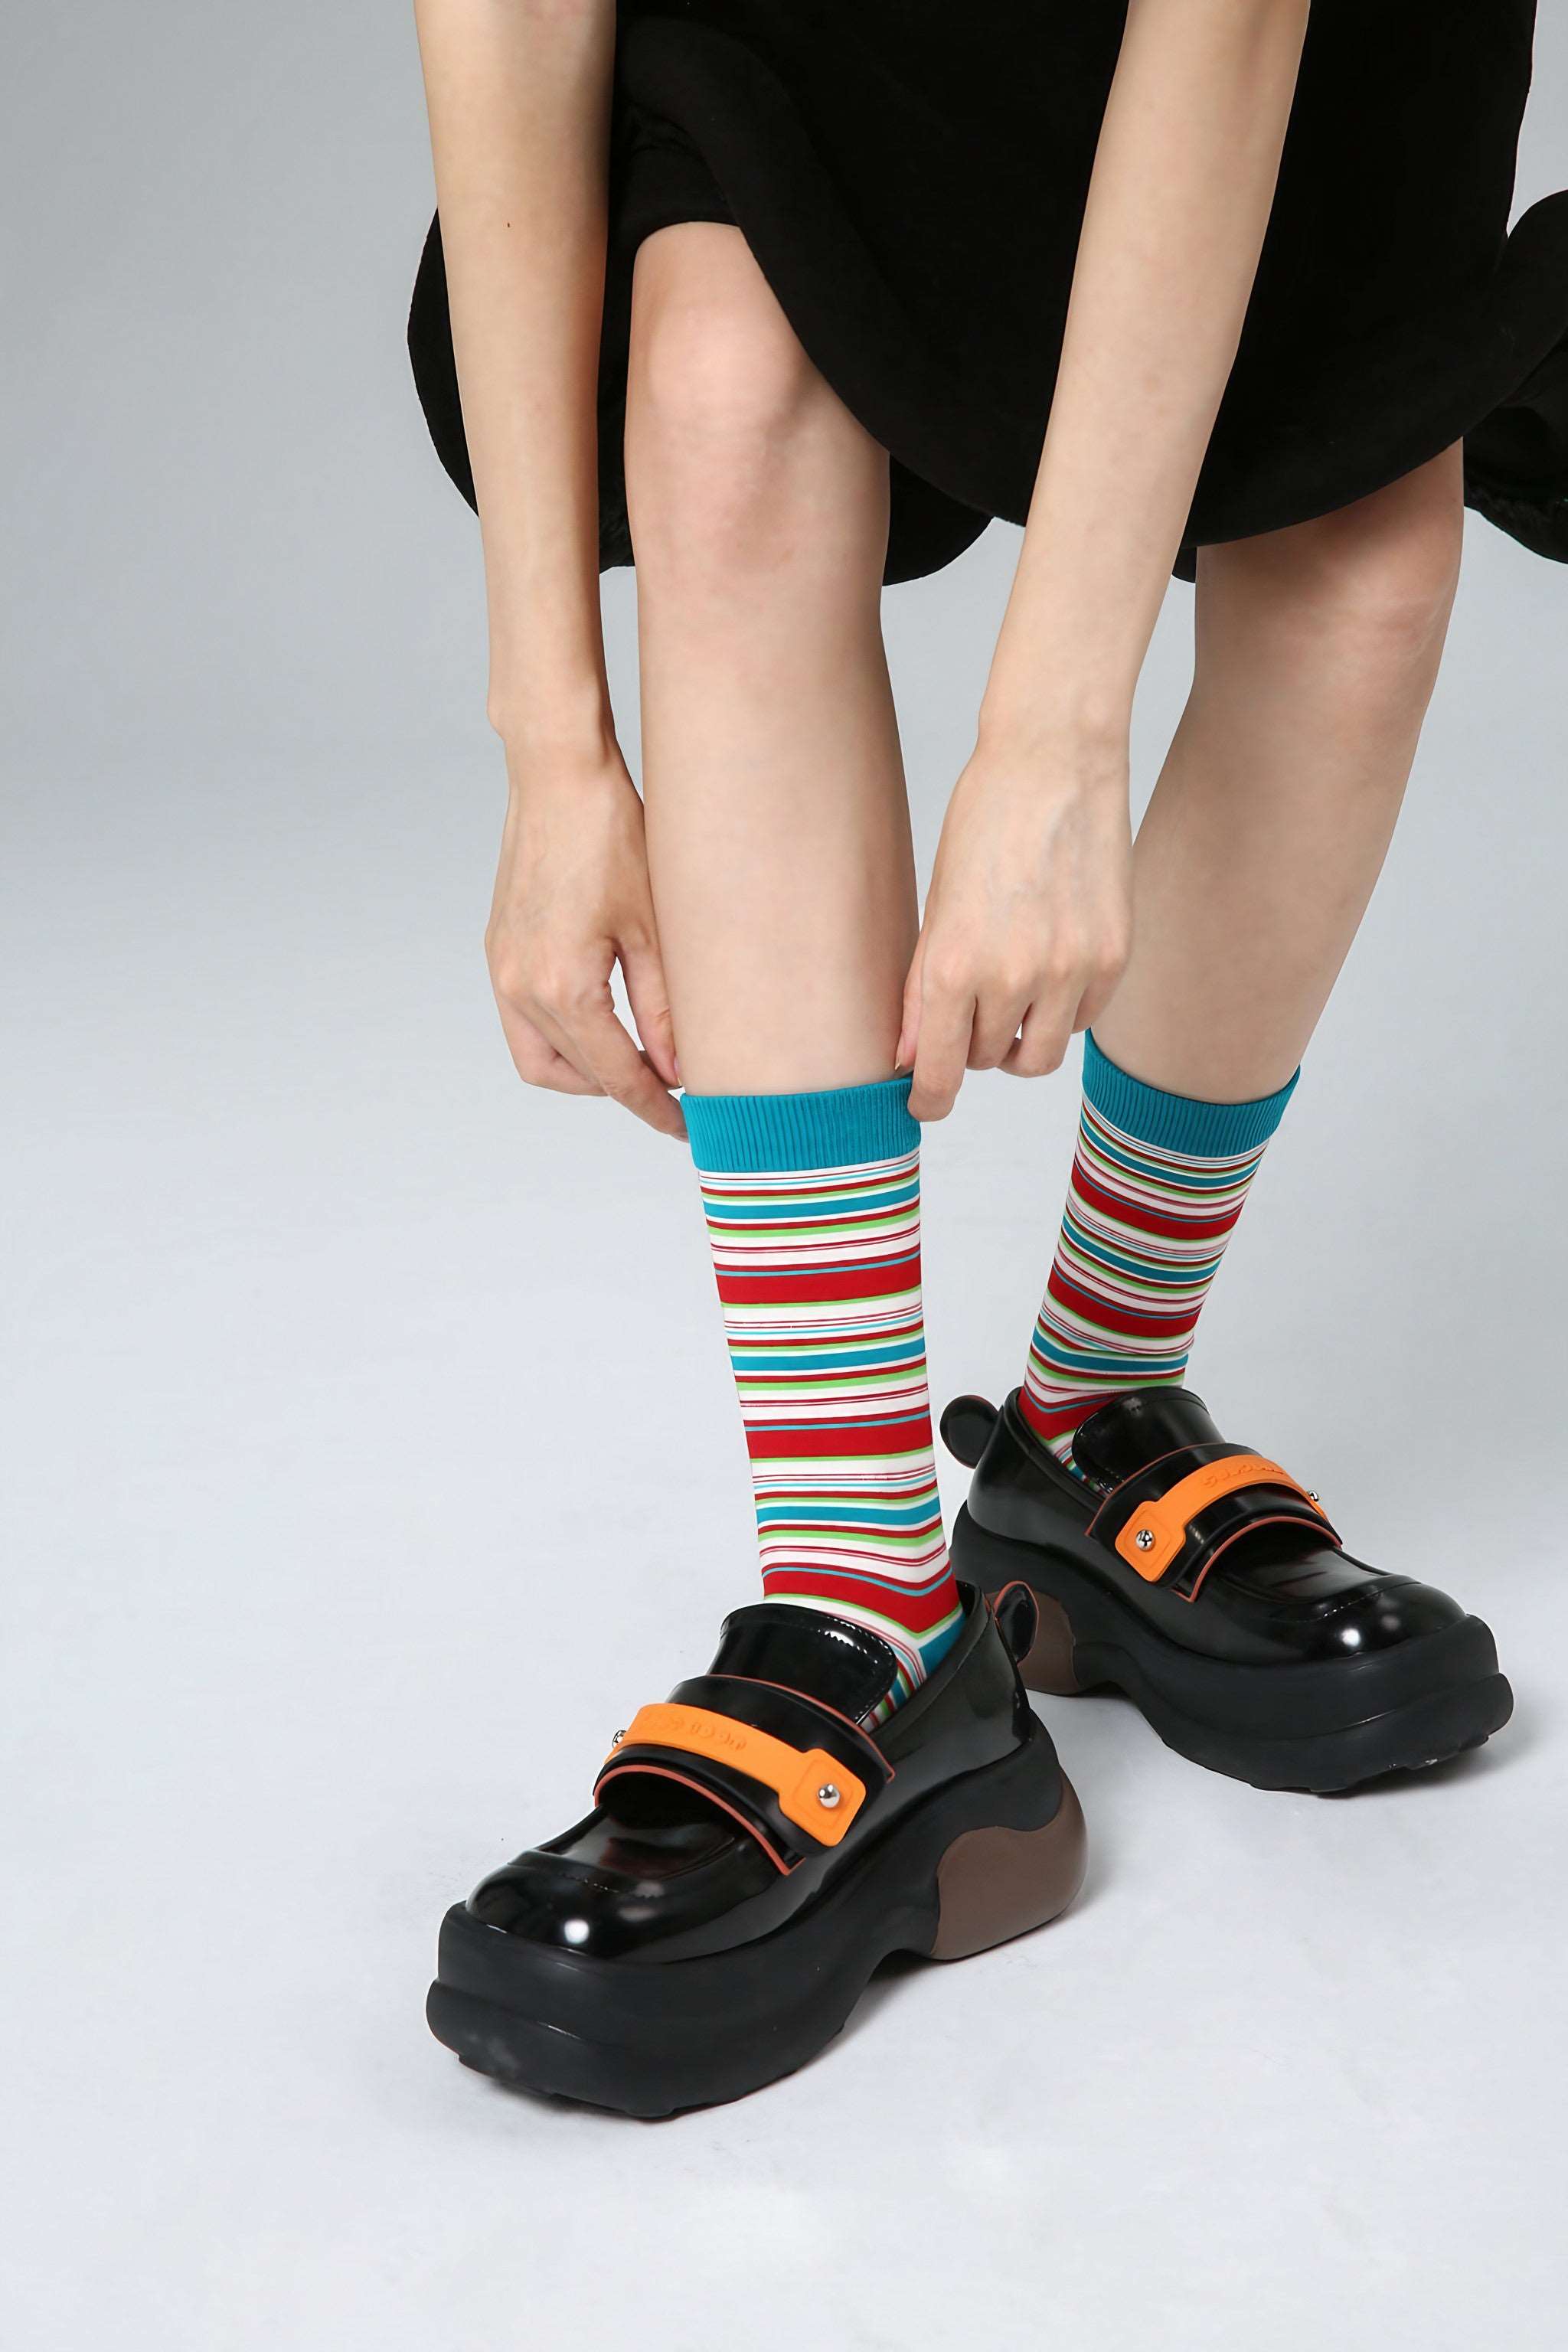 A woman showcasing her Blackpink Funky Socks paired with sleek black footwear